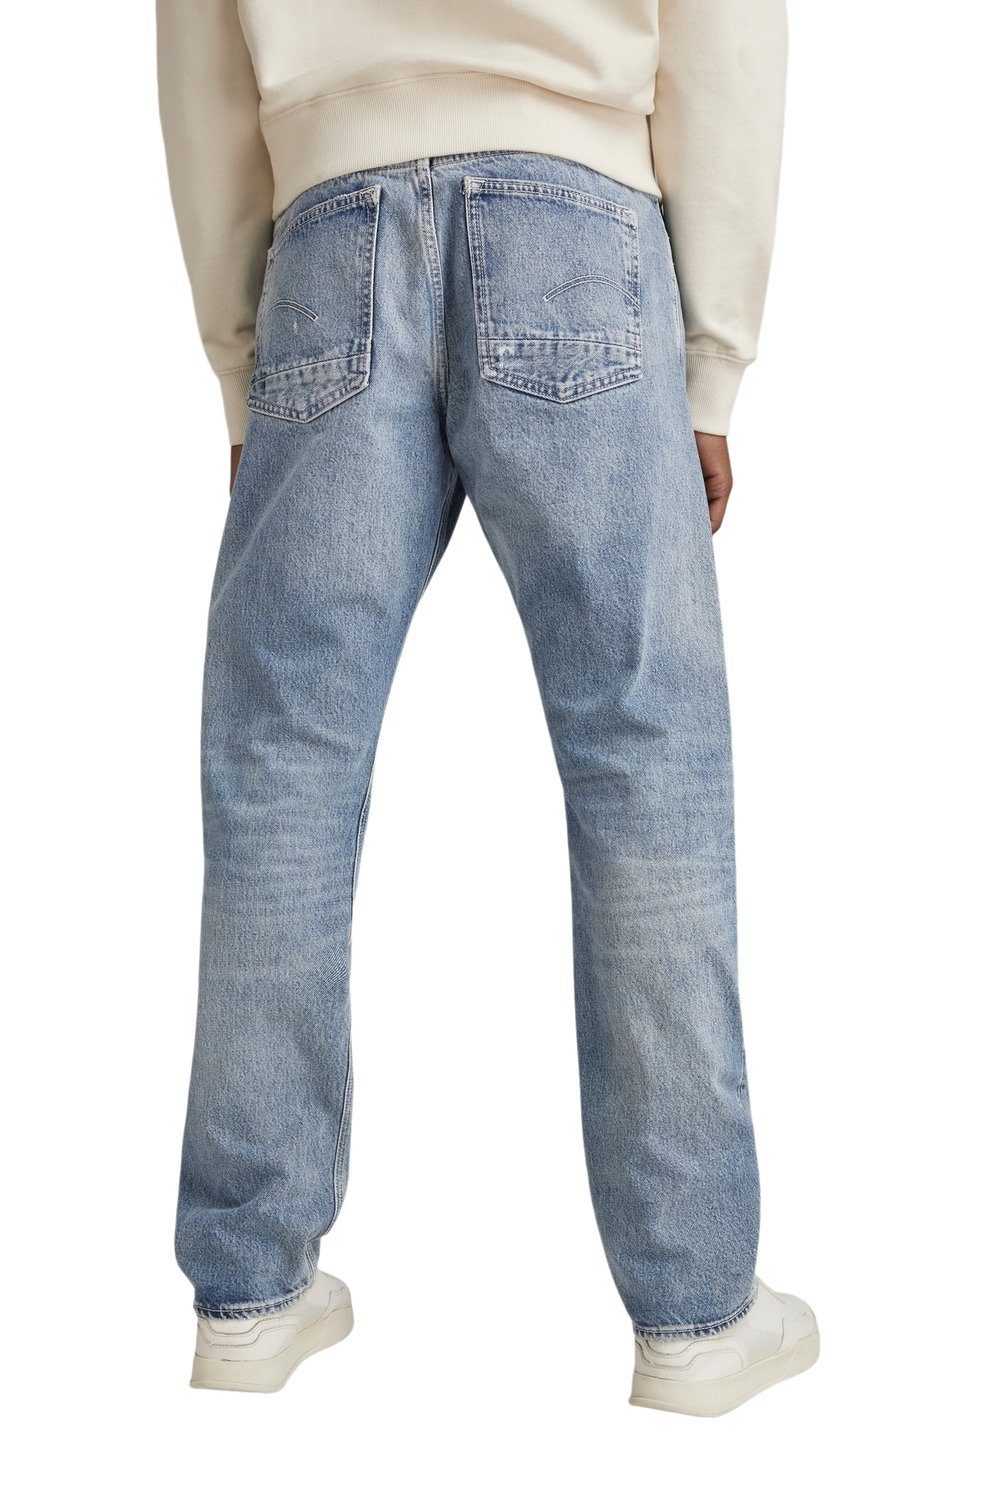 STRAIGHT G-Star Baumwolle RAW REGULAR aus TRIPLE A Straight-Jeans